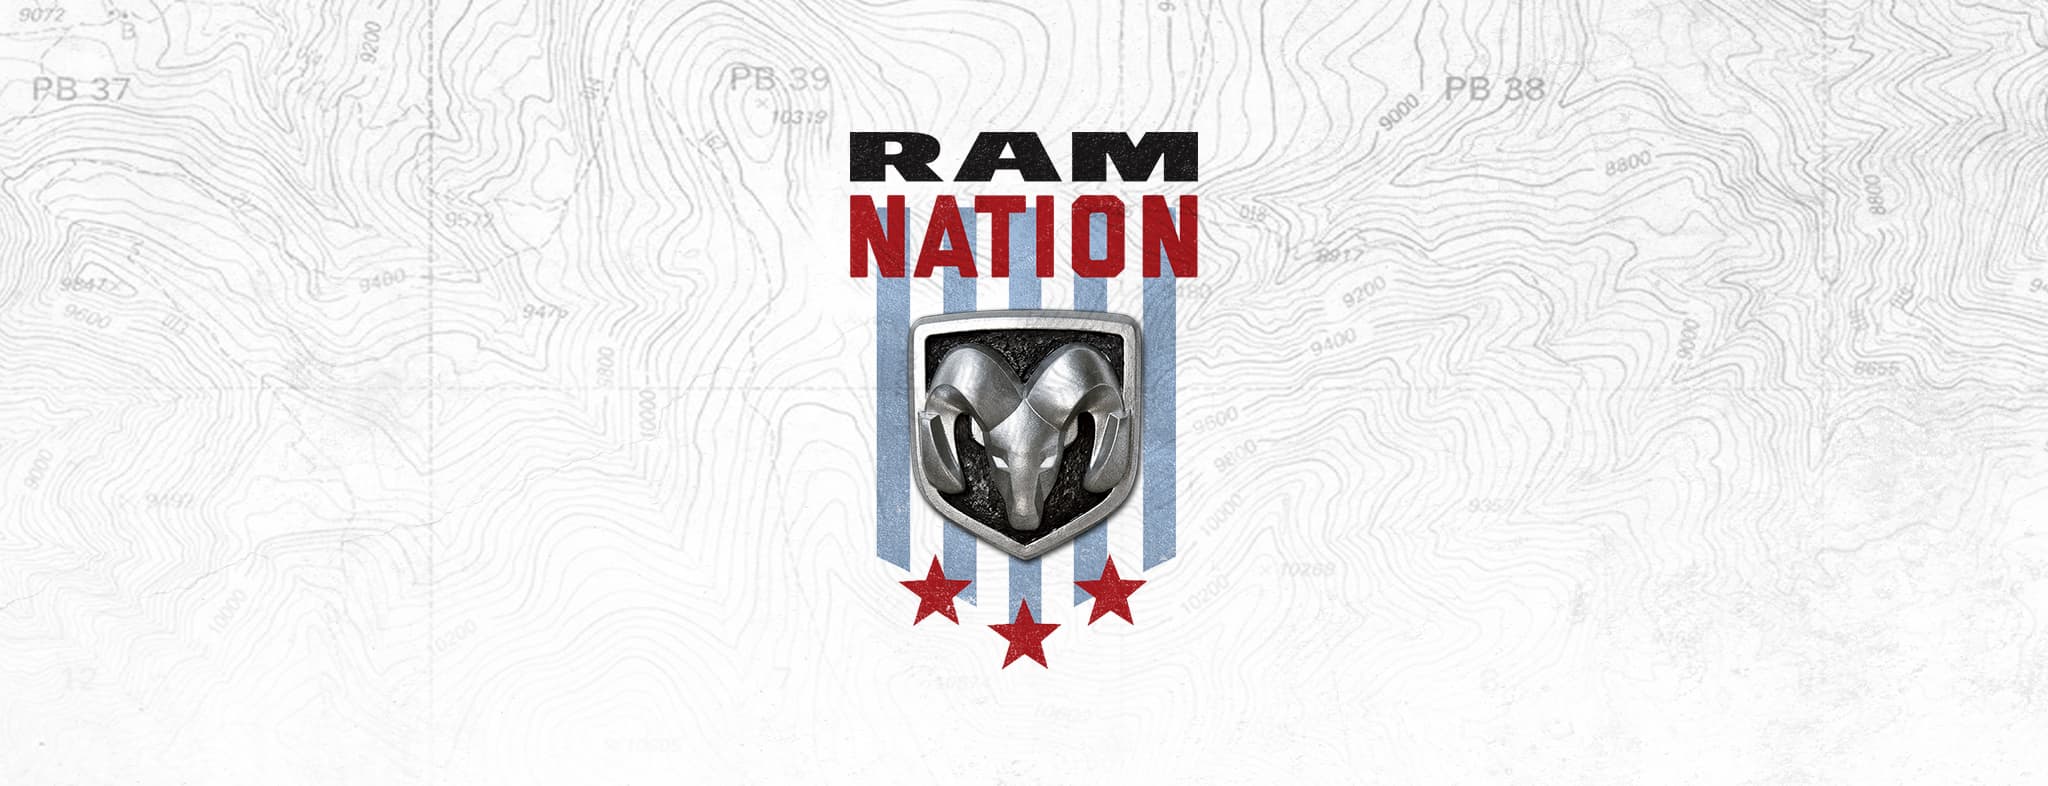 Ram Nation logo.